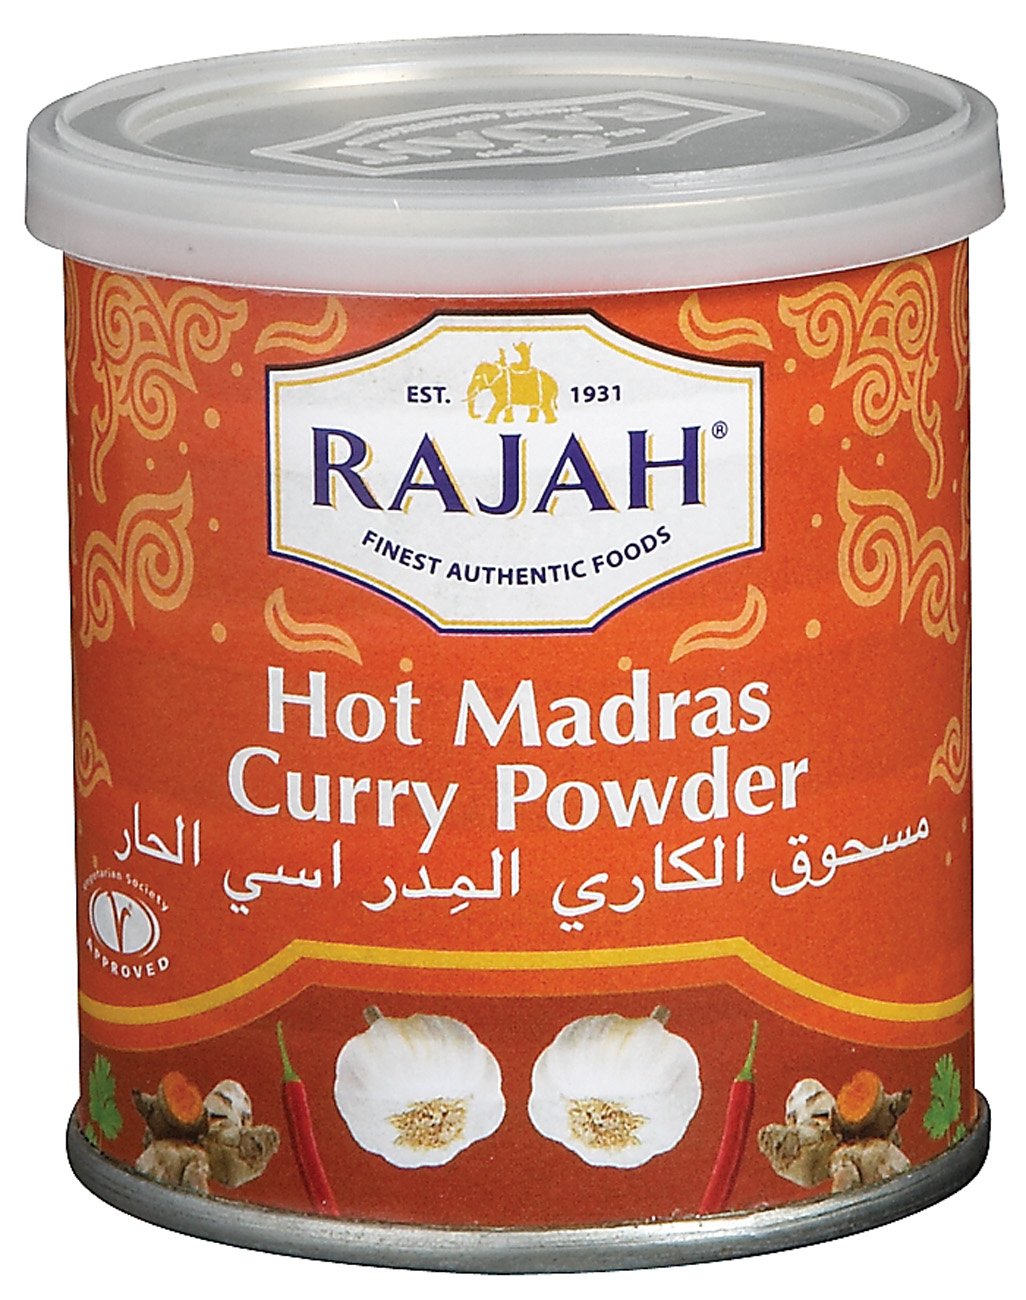 Rajah Hot Madras Curry Powder - Shop Spice Mixes at H-E-B